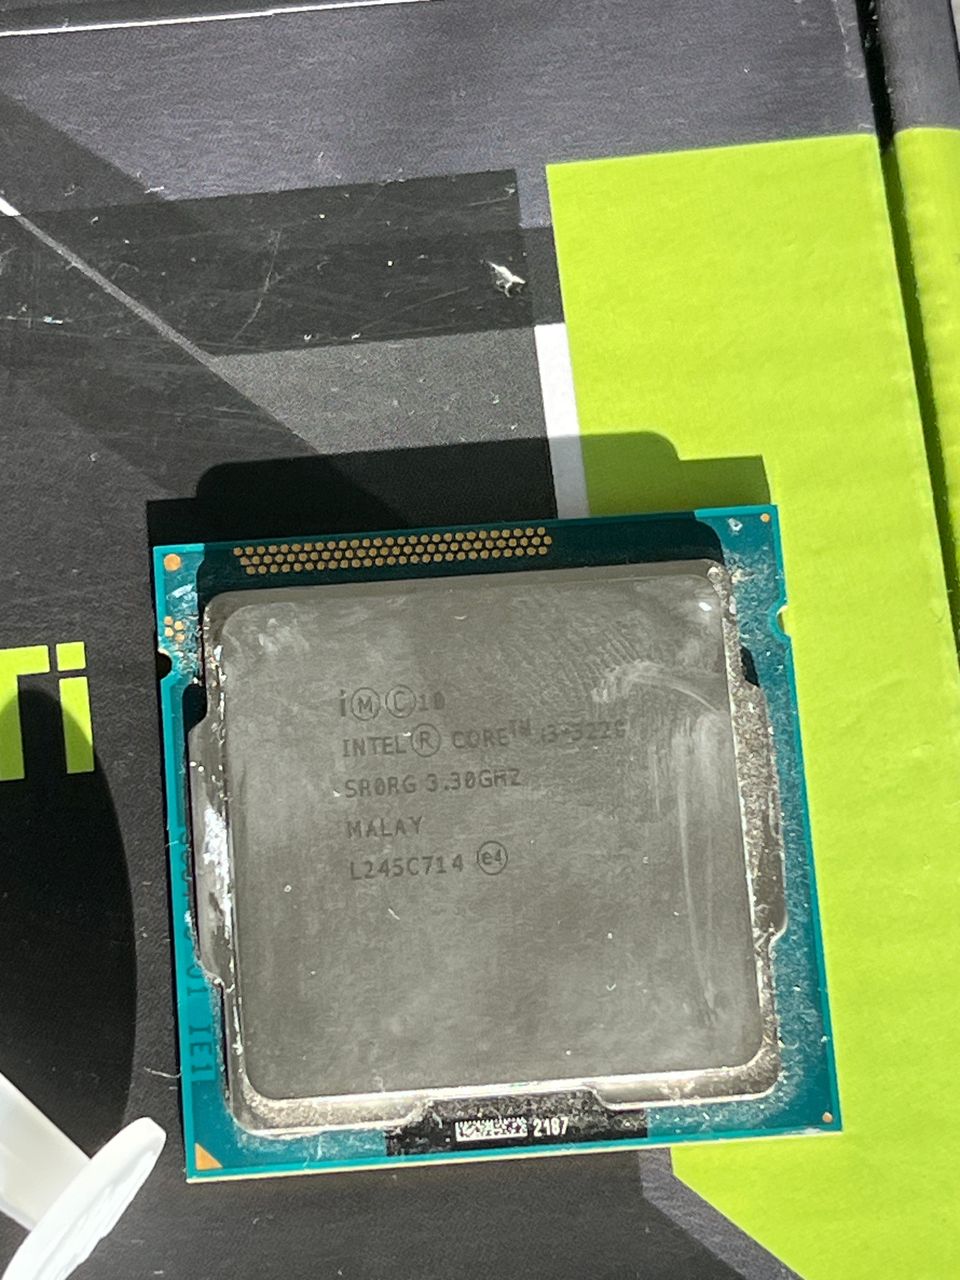 Intel i3 3220